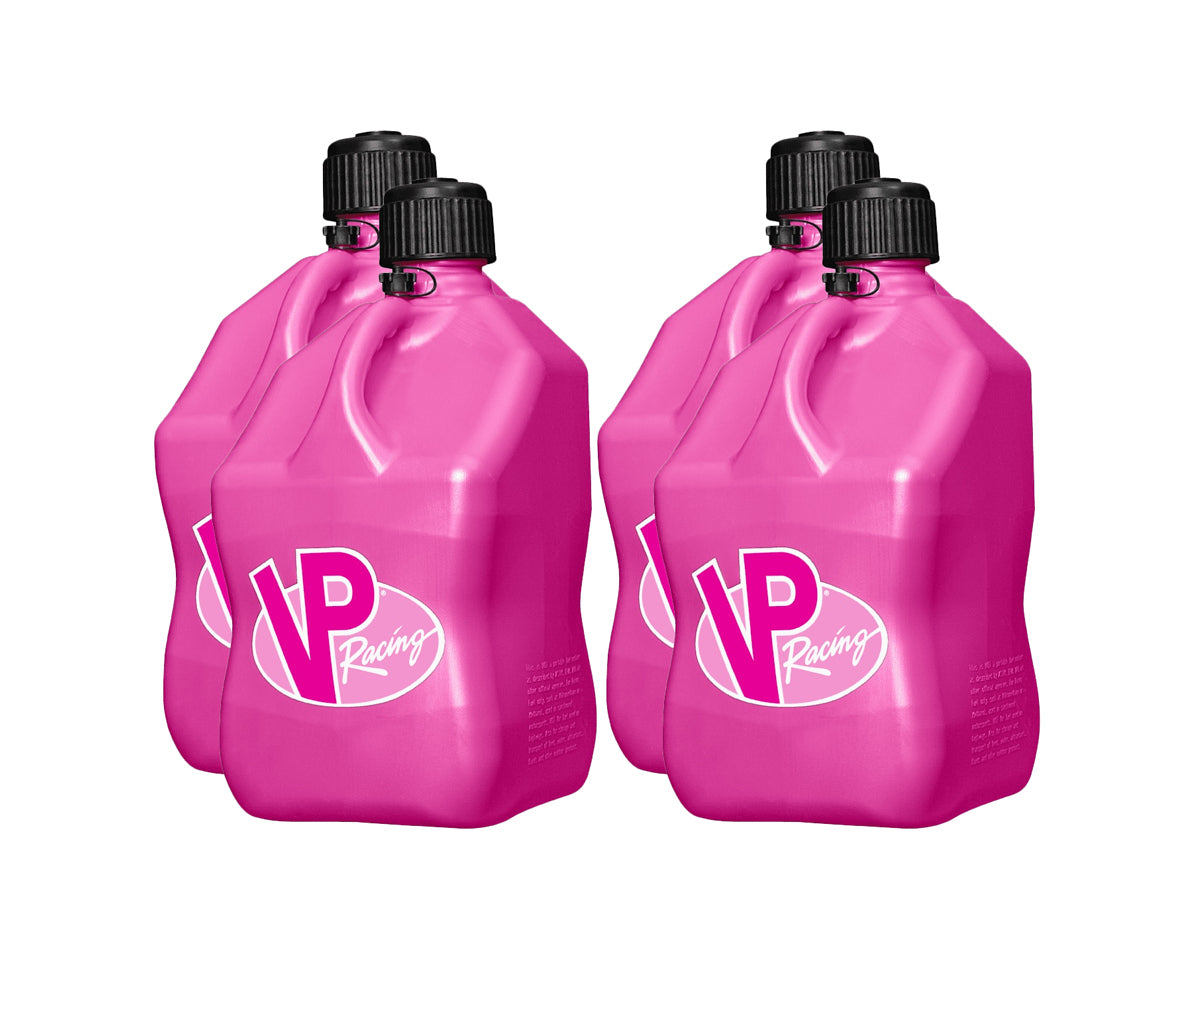 VP Racing 5.5-Gallon Motorsport Container - Set of 4 - Pink Jug, Black Cap - Dirty Racing Products